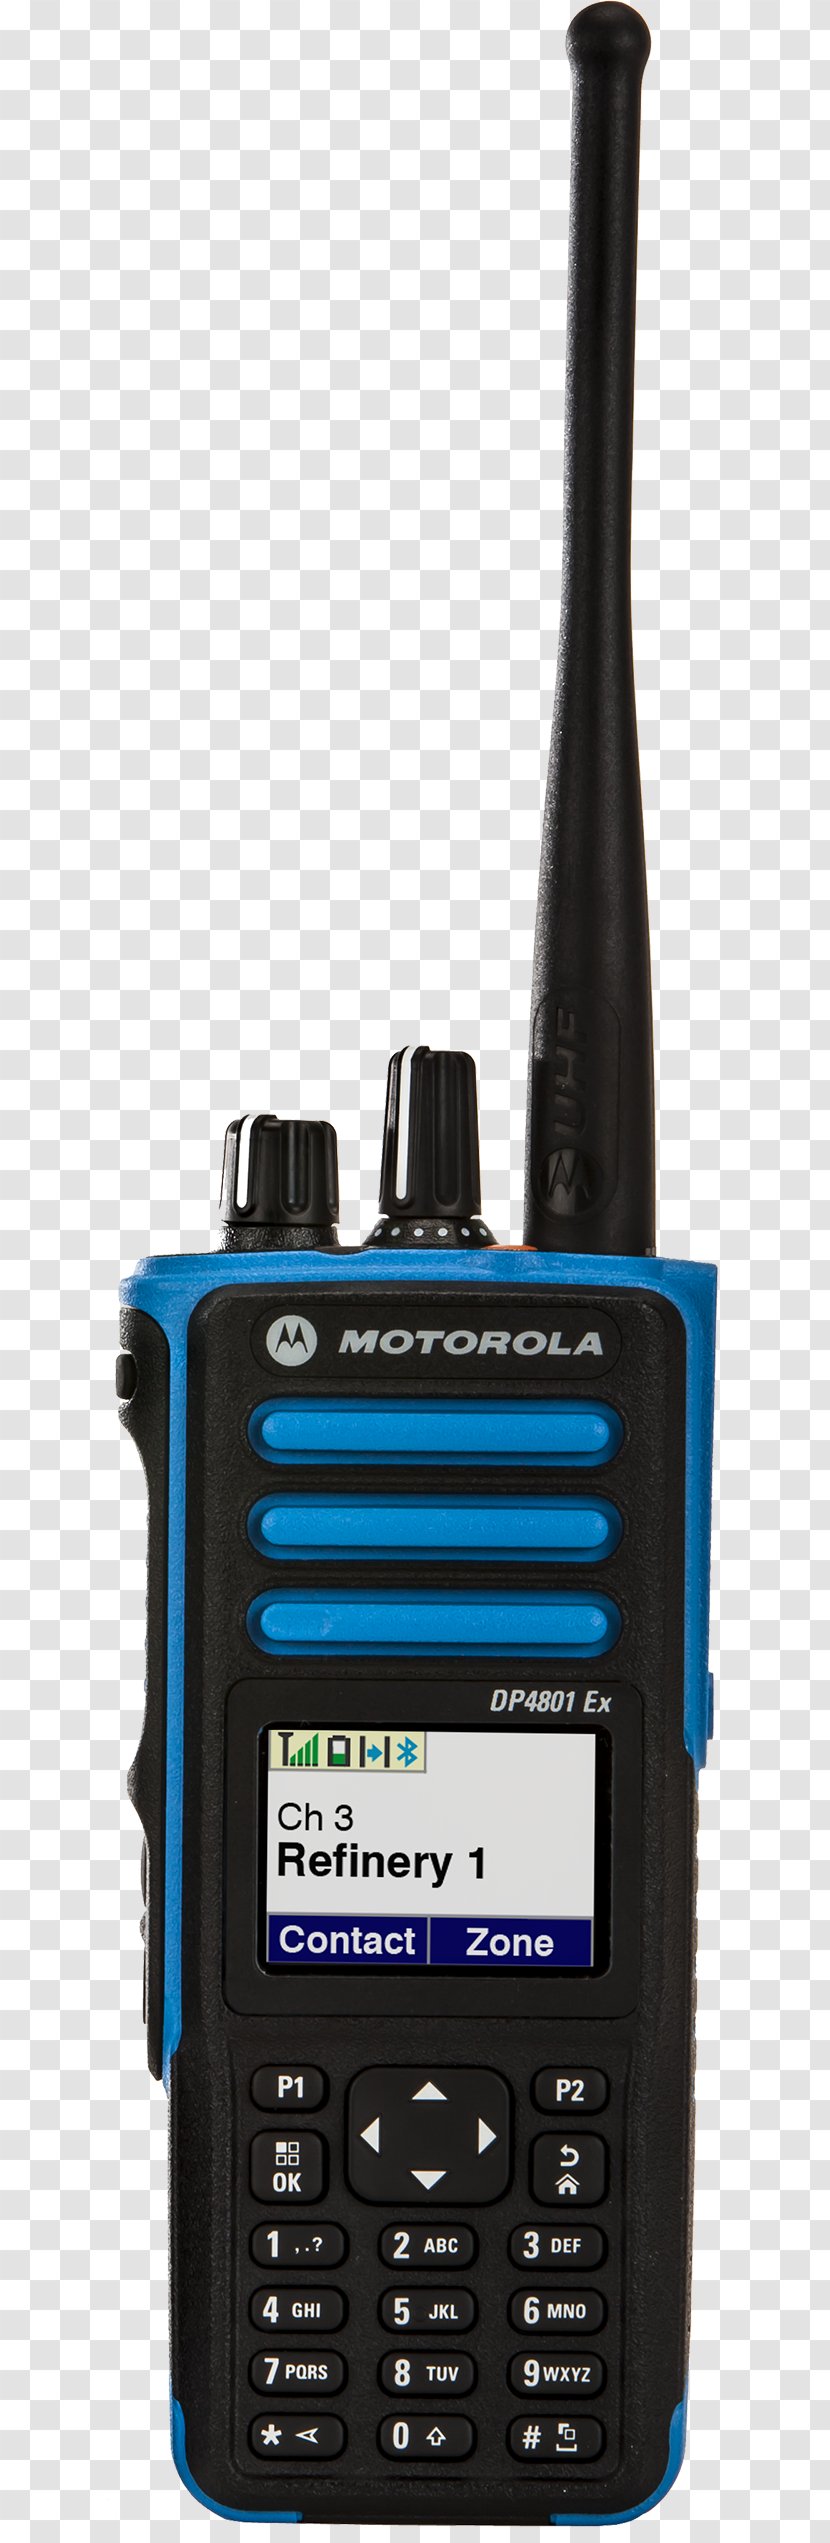 Two-way Radio Motorola Walkie-talkie Digital Mobile - Wireless Transparent PNG